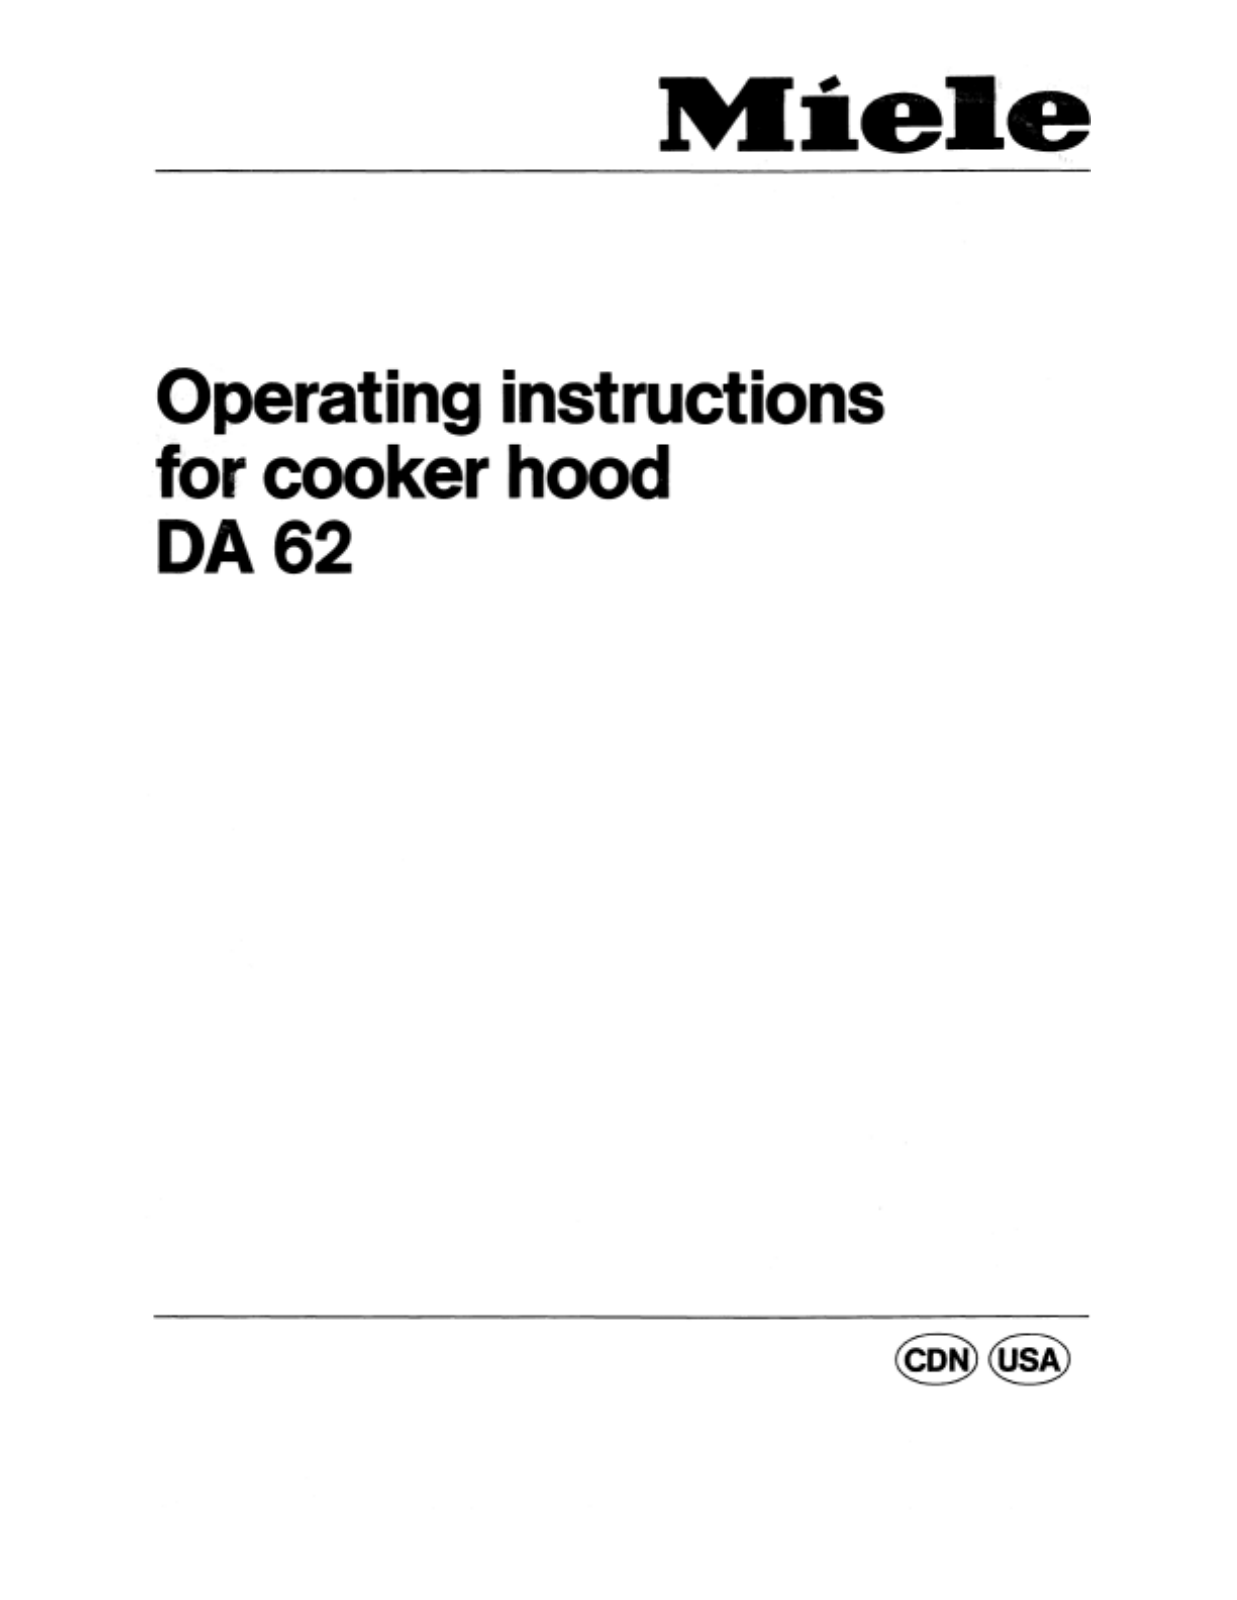 Miele DA 62 Operating instructions